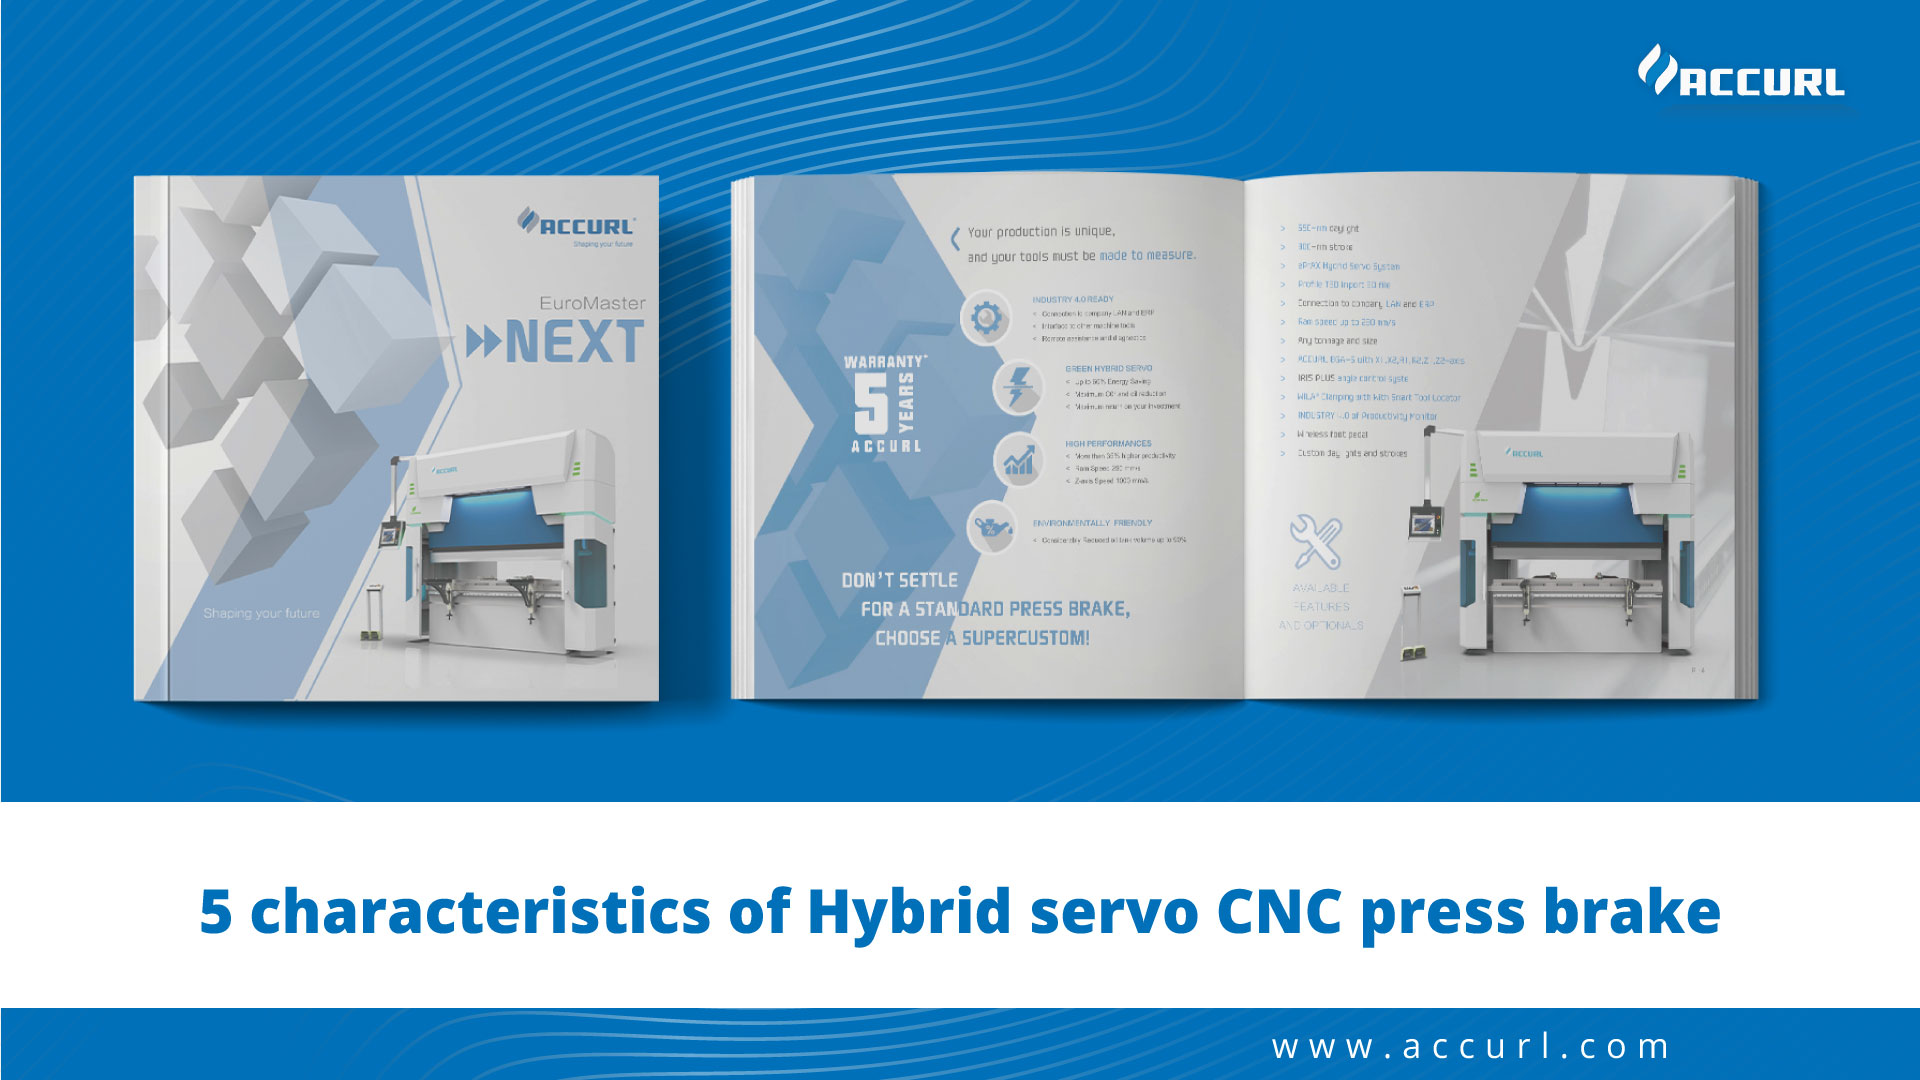 5 Characteristics of Hybrid Servo CNC Press Brake Machine